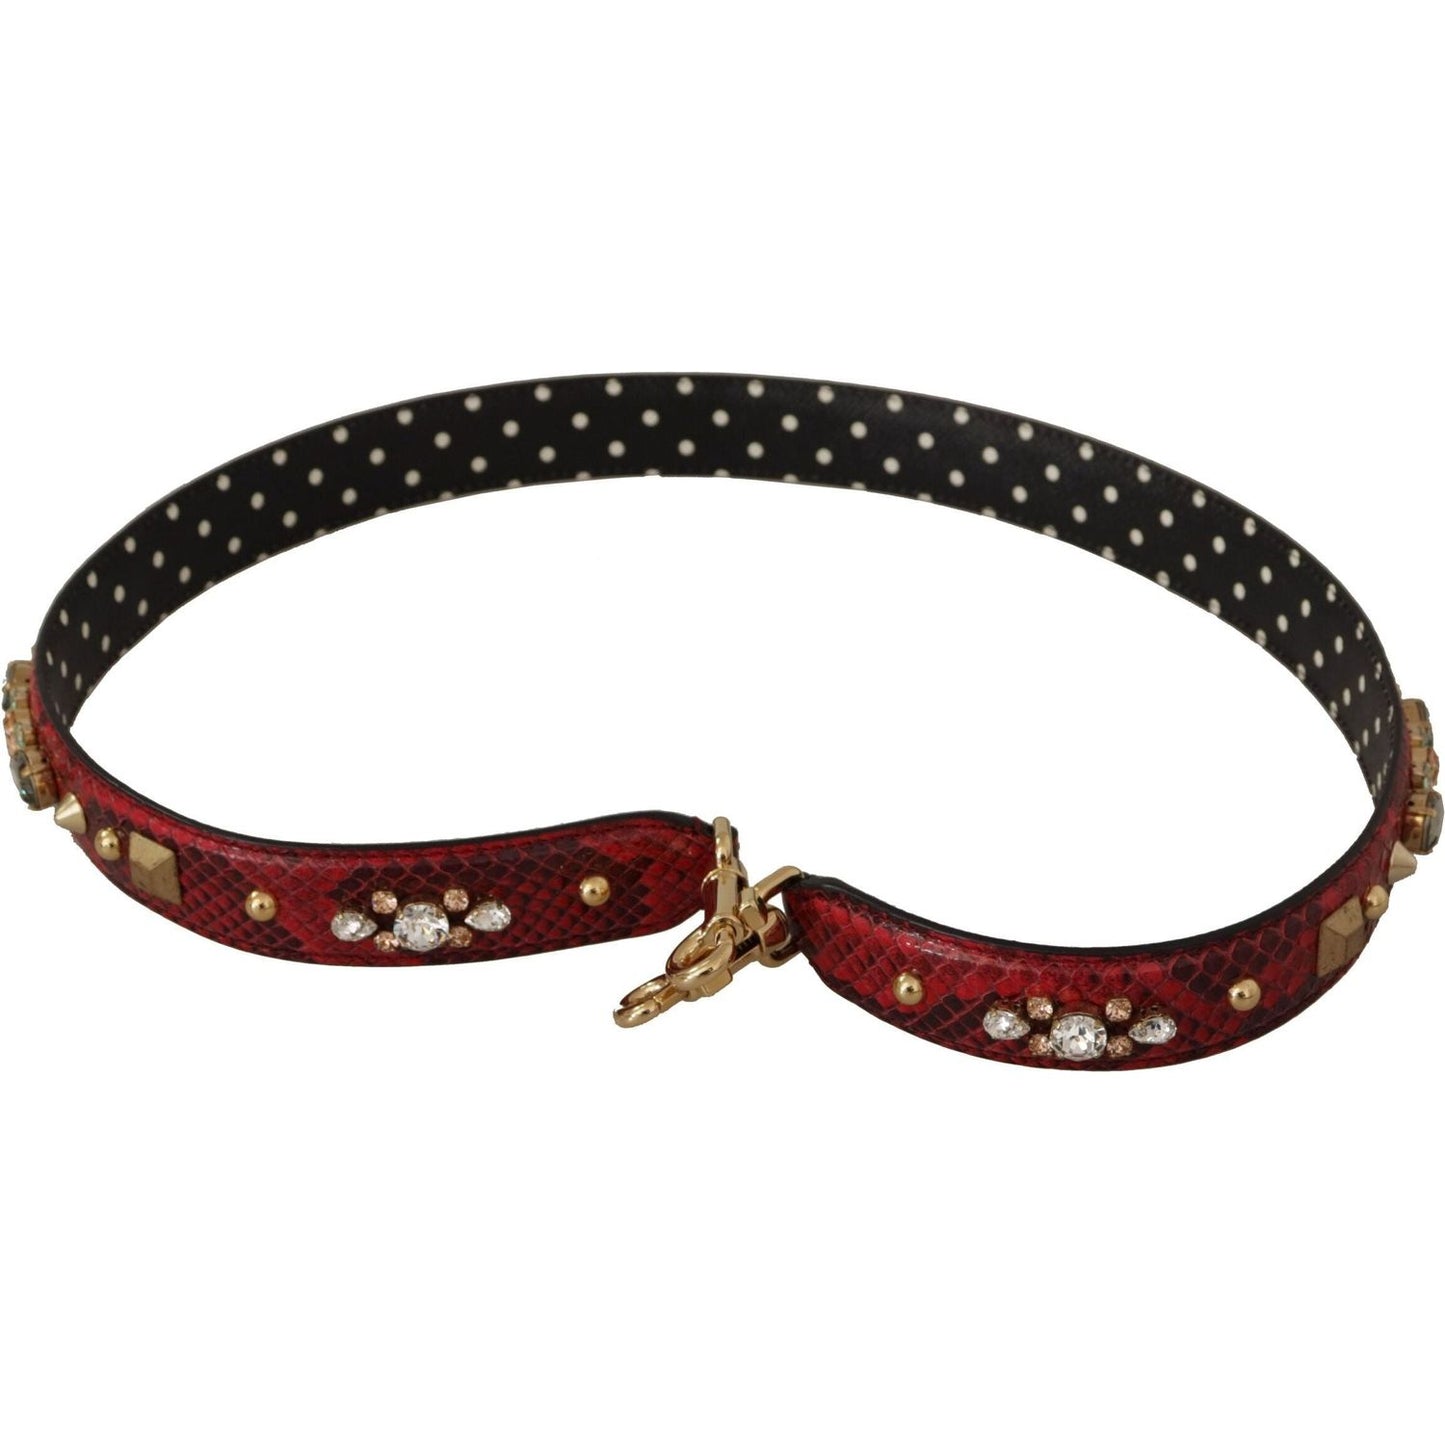 Dolce & Gabbana Red Python Leather Shoulder Bag Strap red-python-leather-crystals-reversible-shoulder-strap IMG_9902-2-scaled-50a2cc91-198.jpg